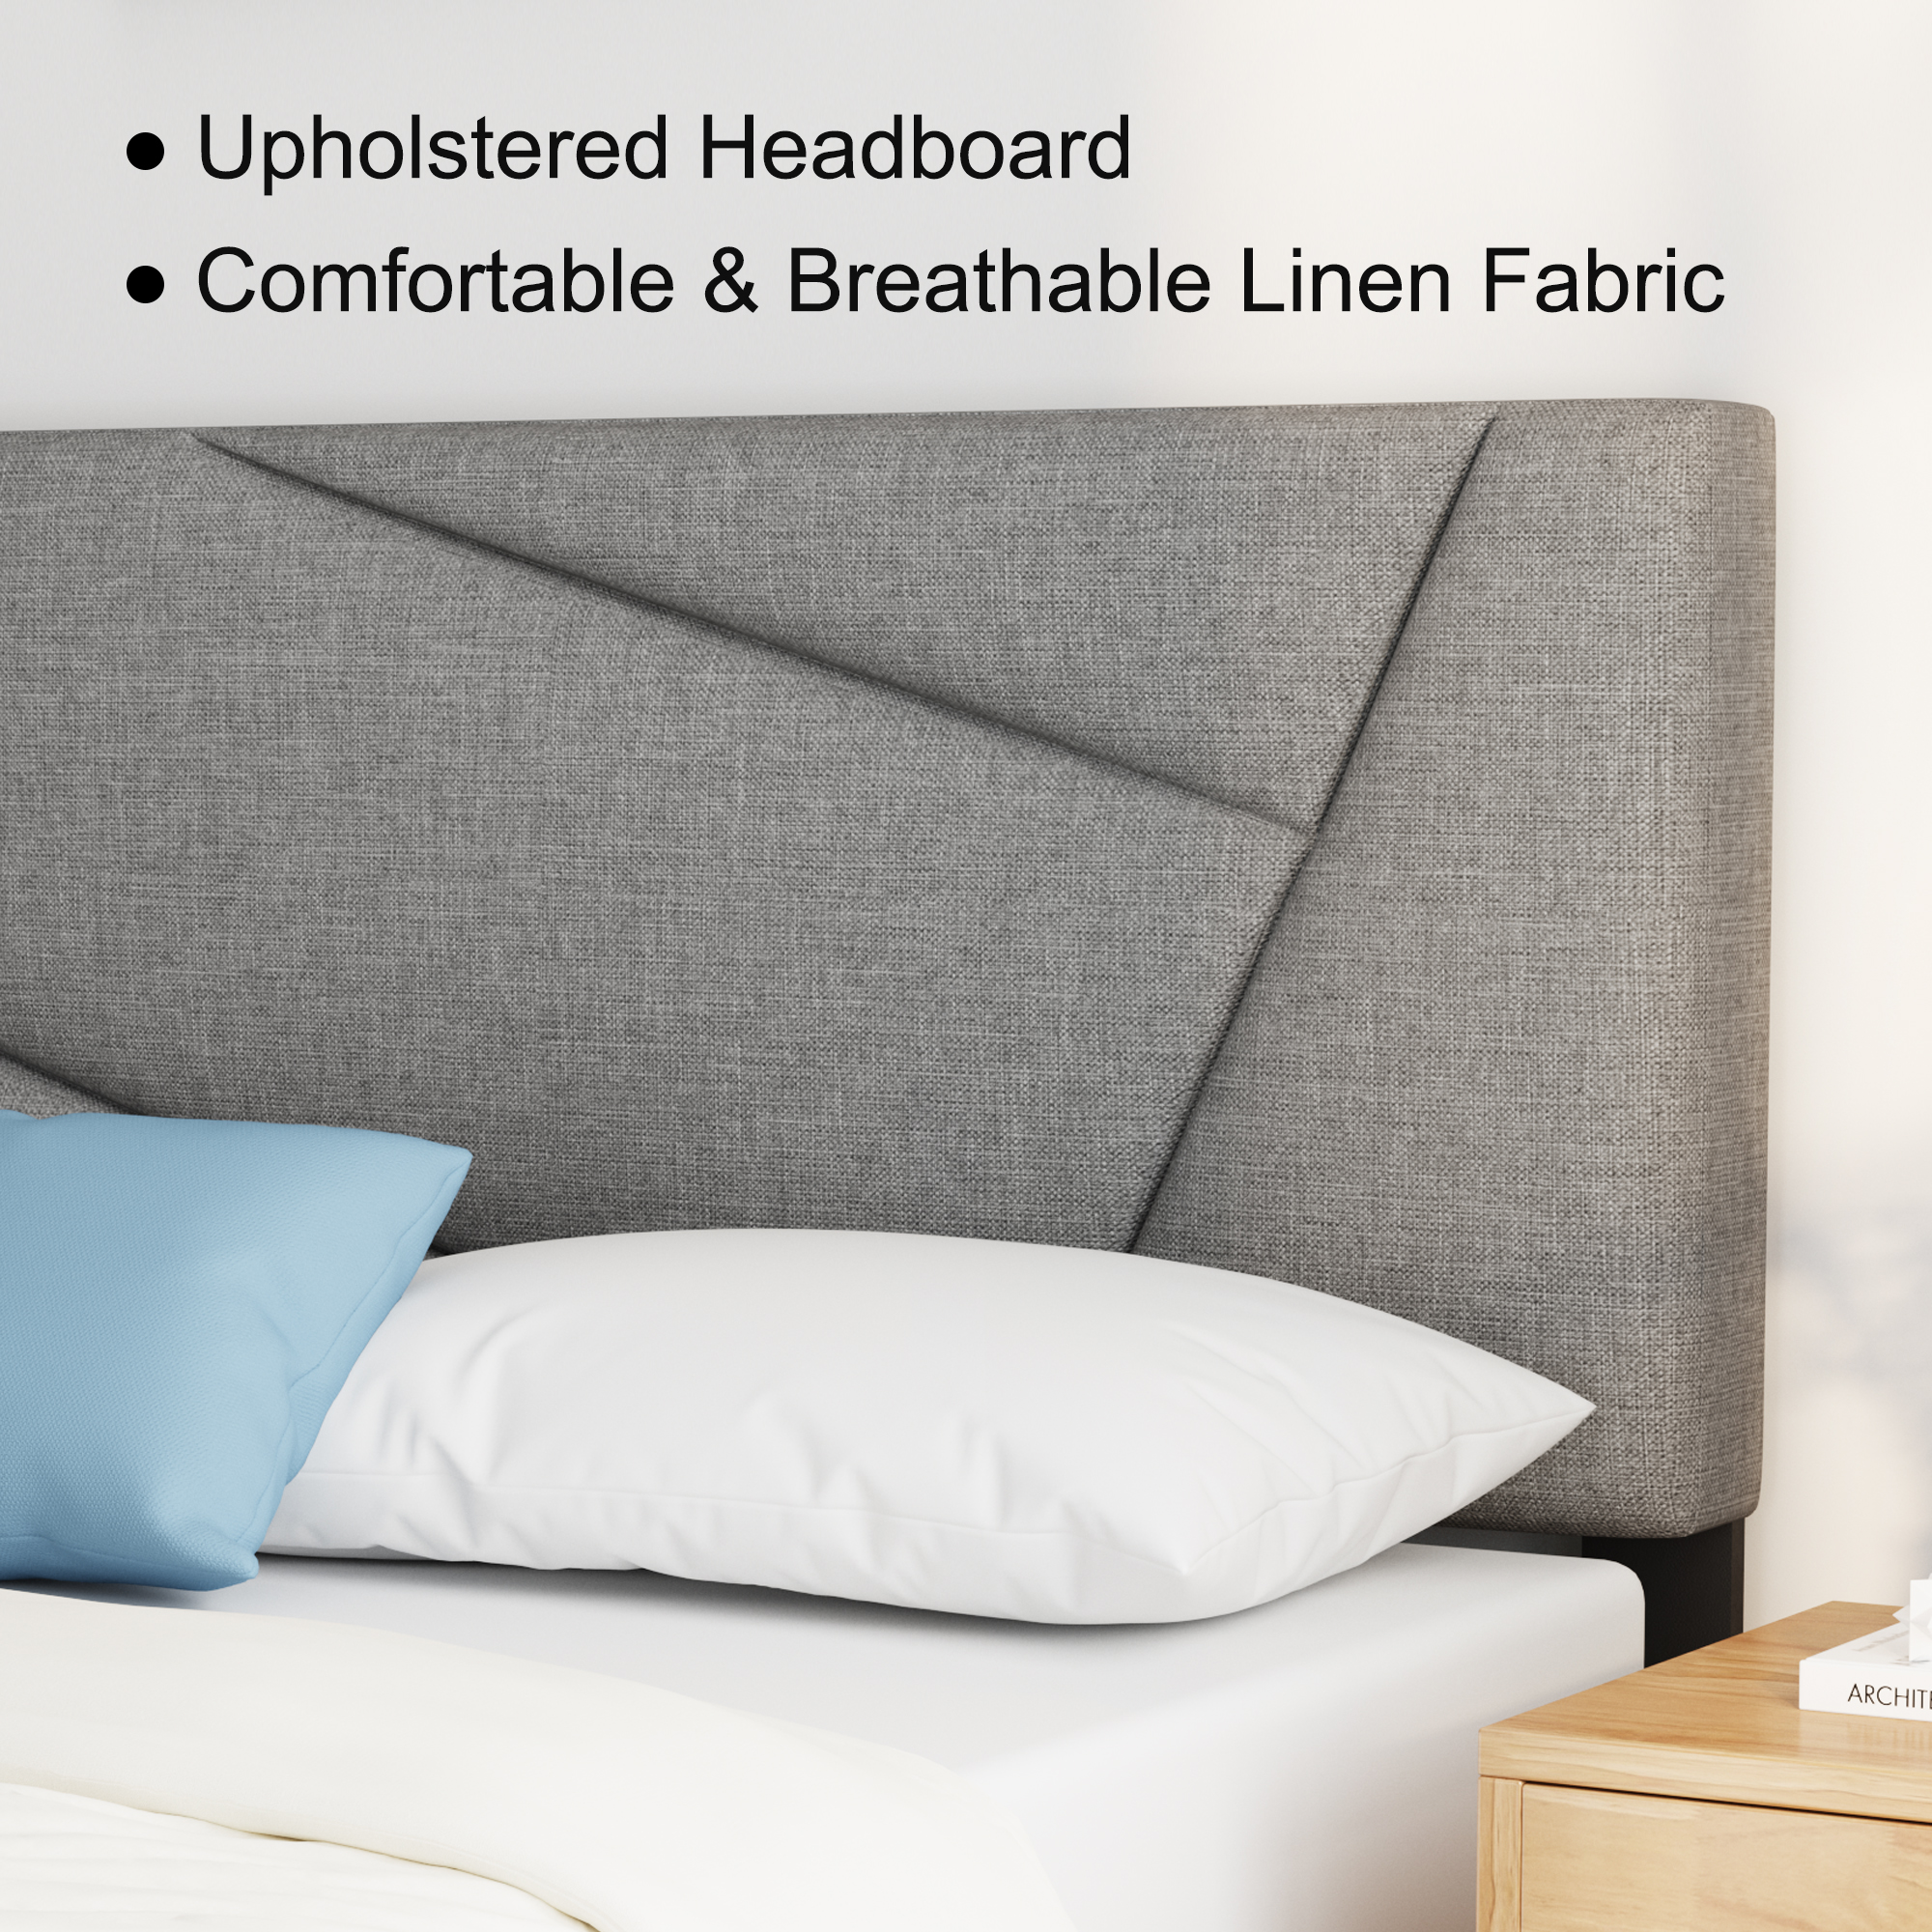 Full Bed Frame, HAIIDE Full Size Platform Bed Frame with Fabric Upholstered Headboard, Light Grey - image 3 of 7